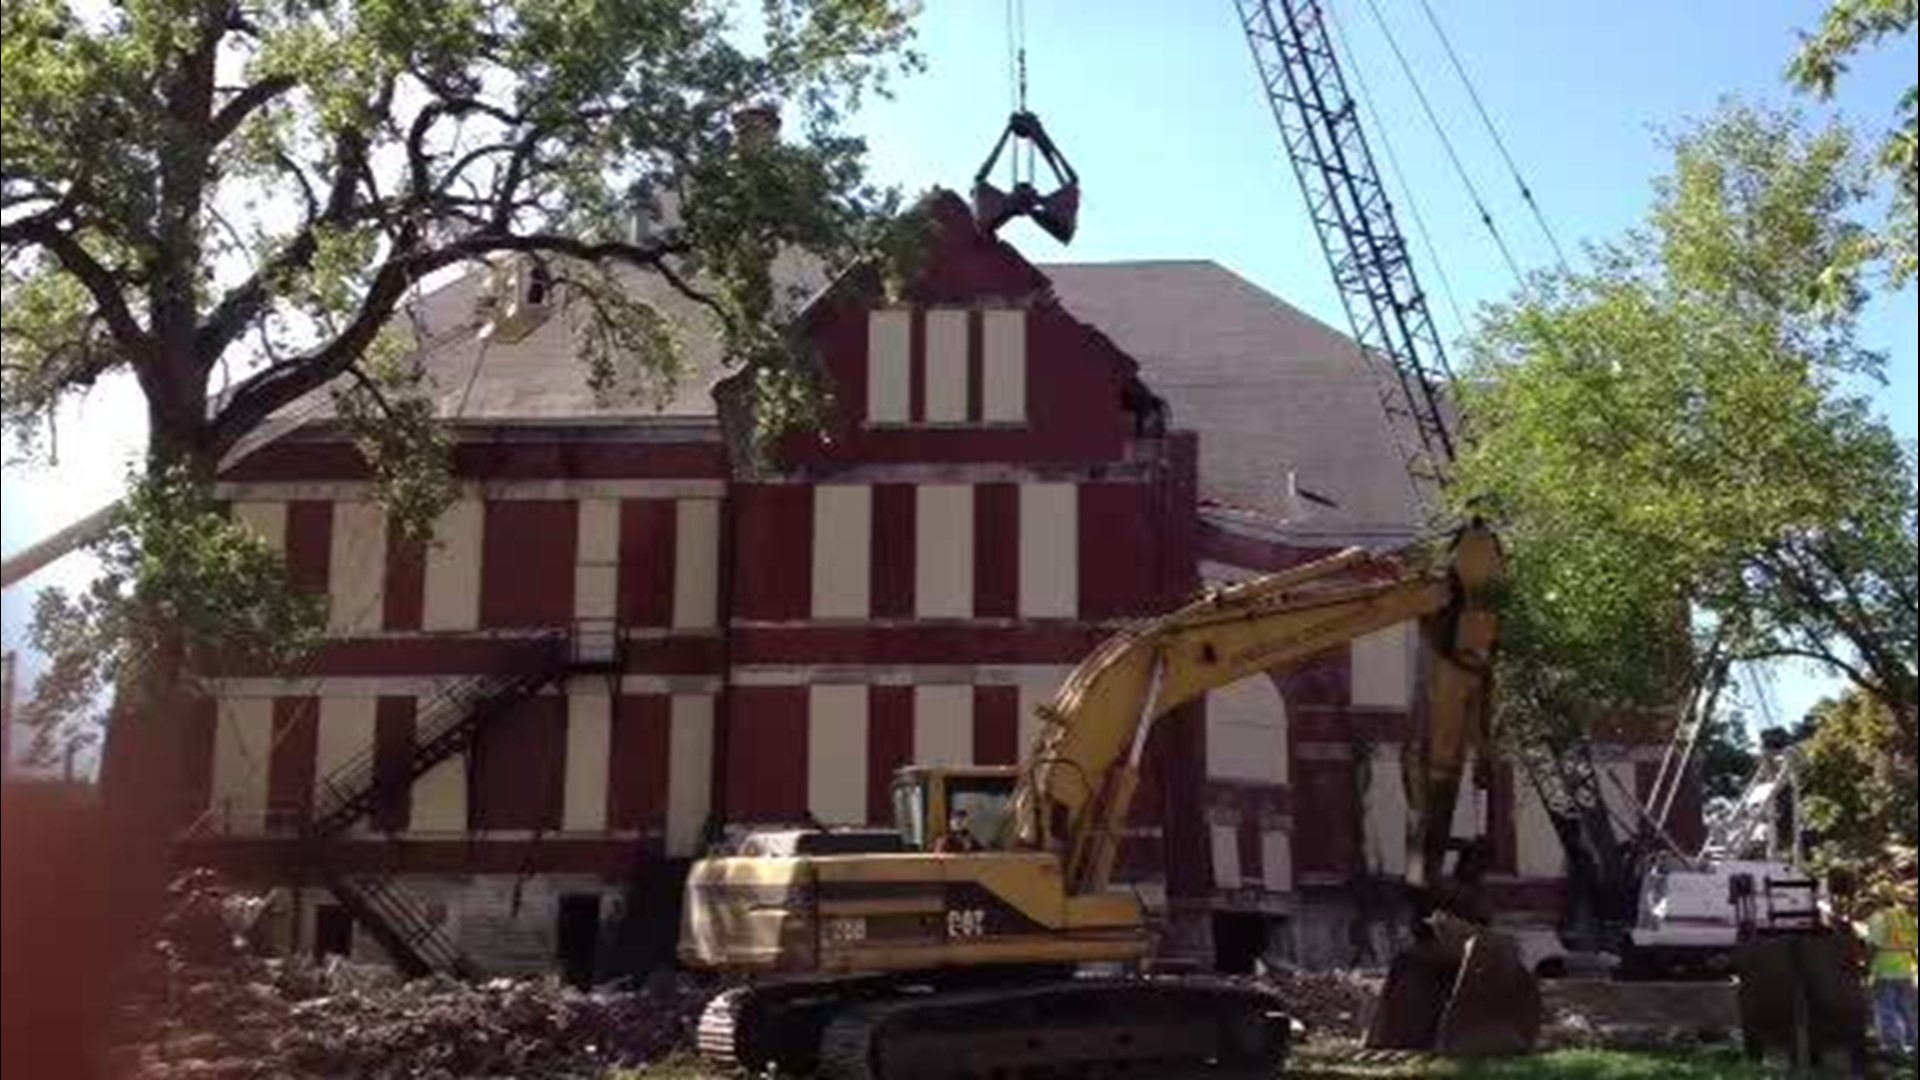 Lincoln School demoliton 2 of 2 WQAD Video 8-20-12.mov